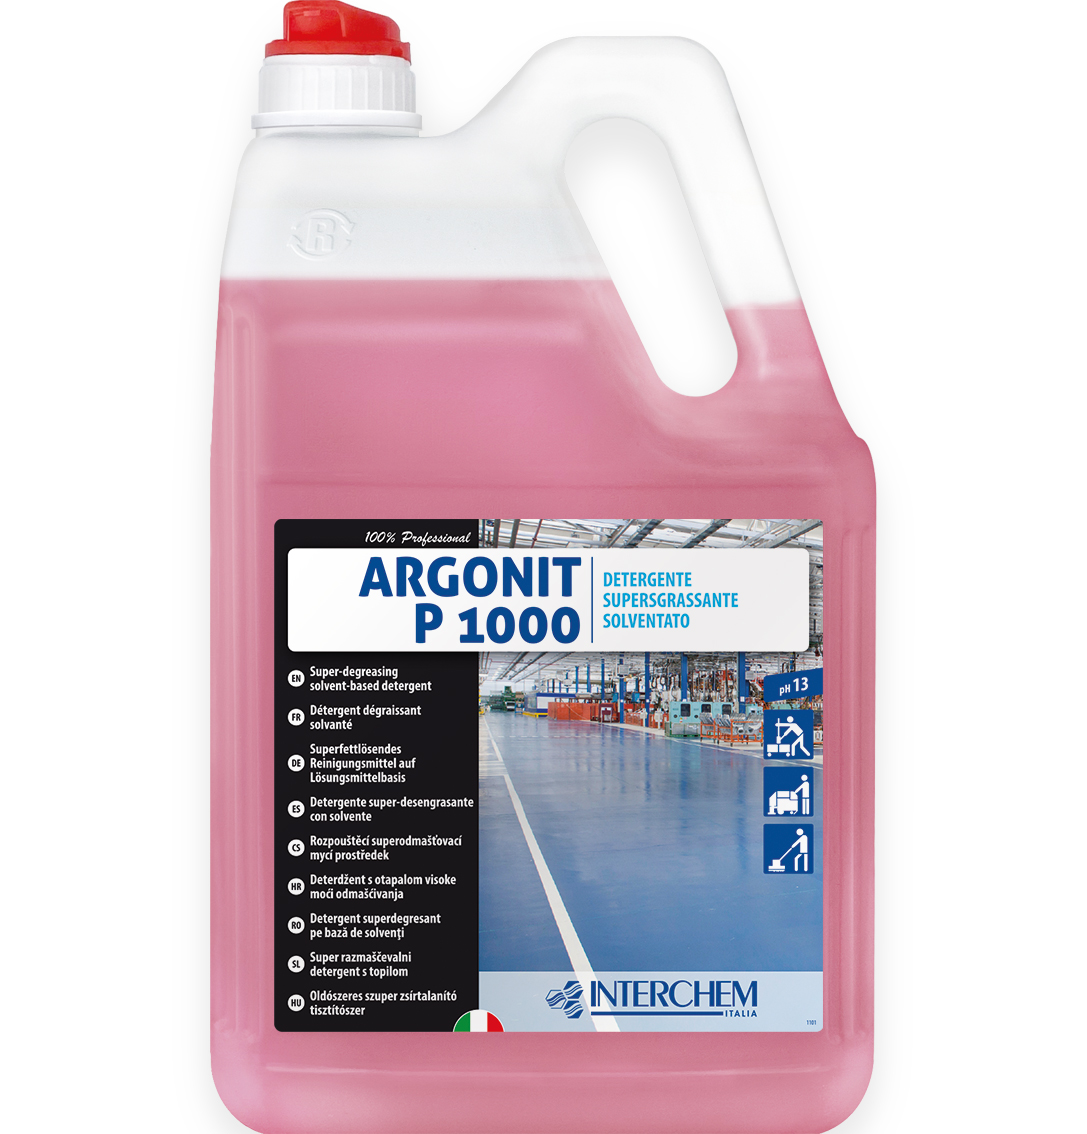 Nuovo detergente Argonit P 1000